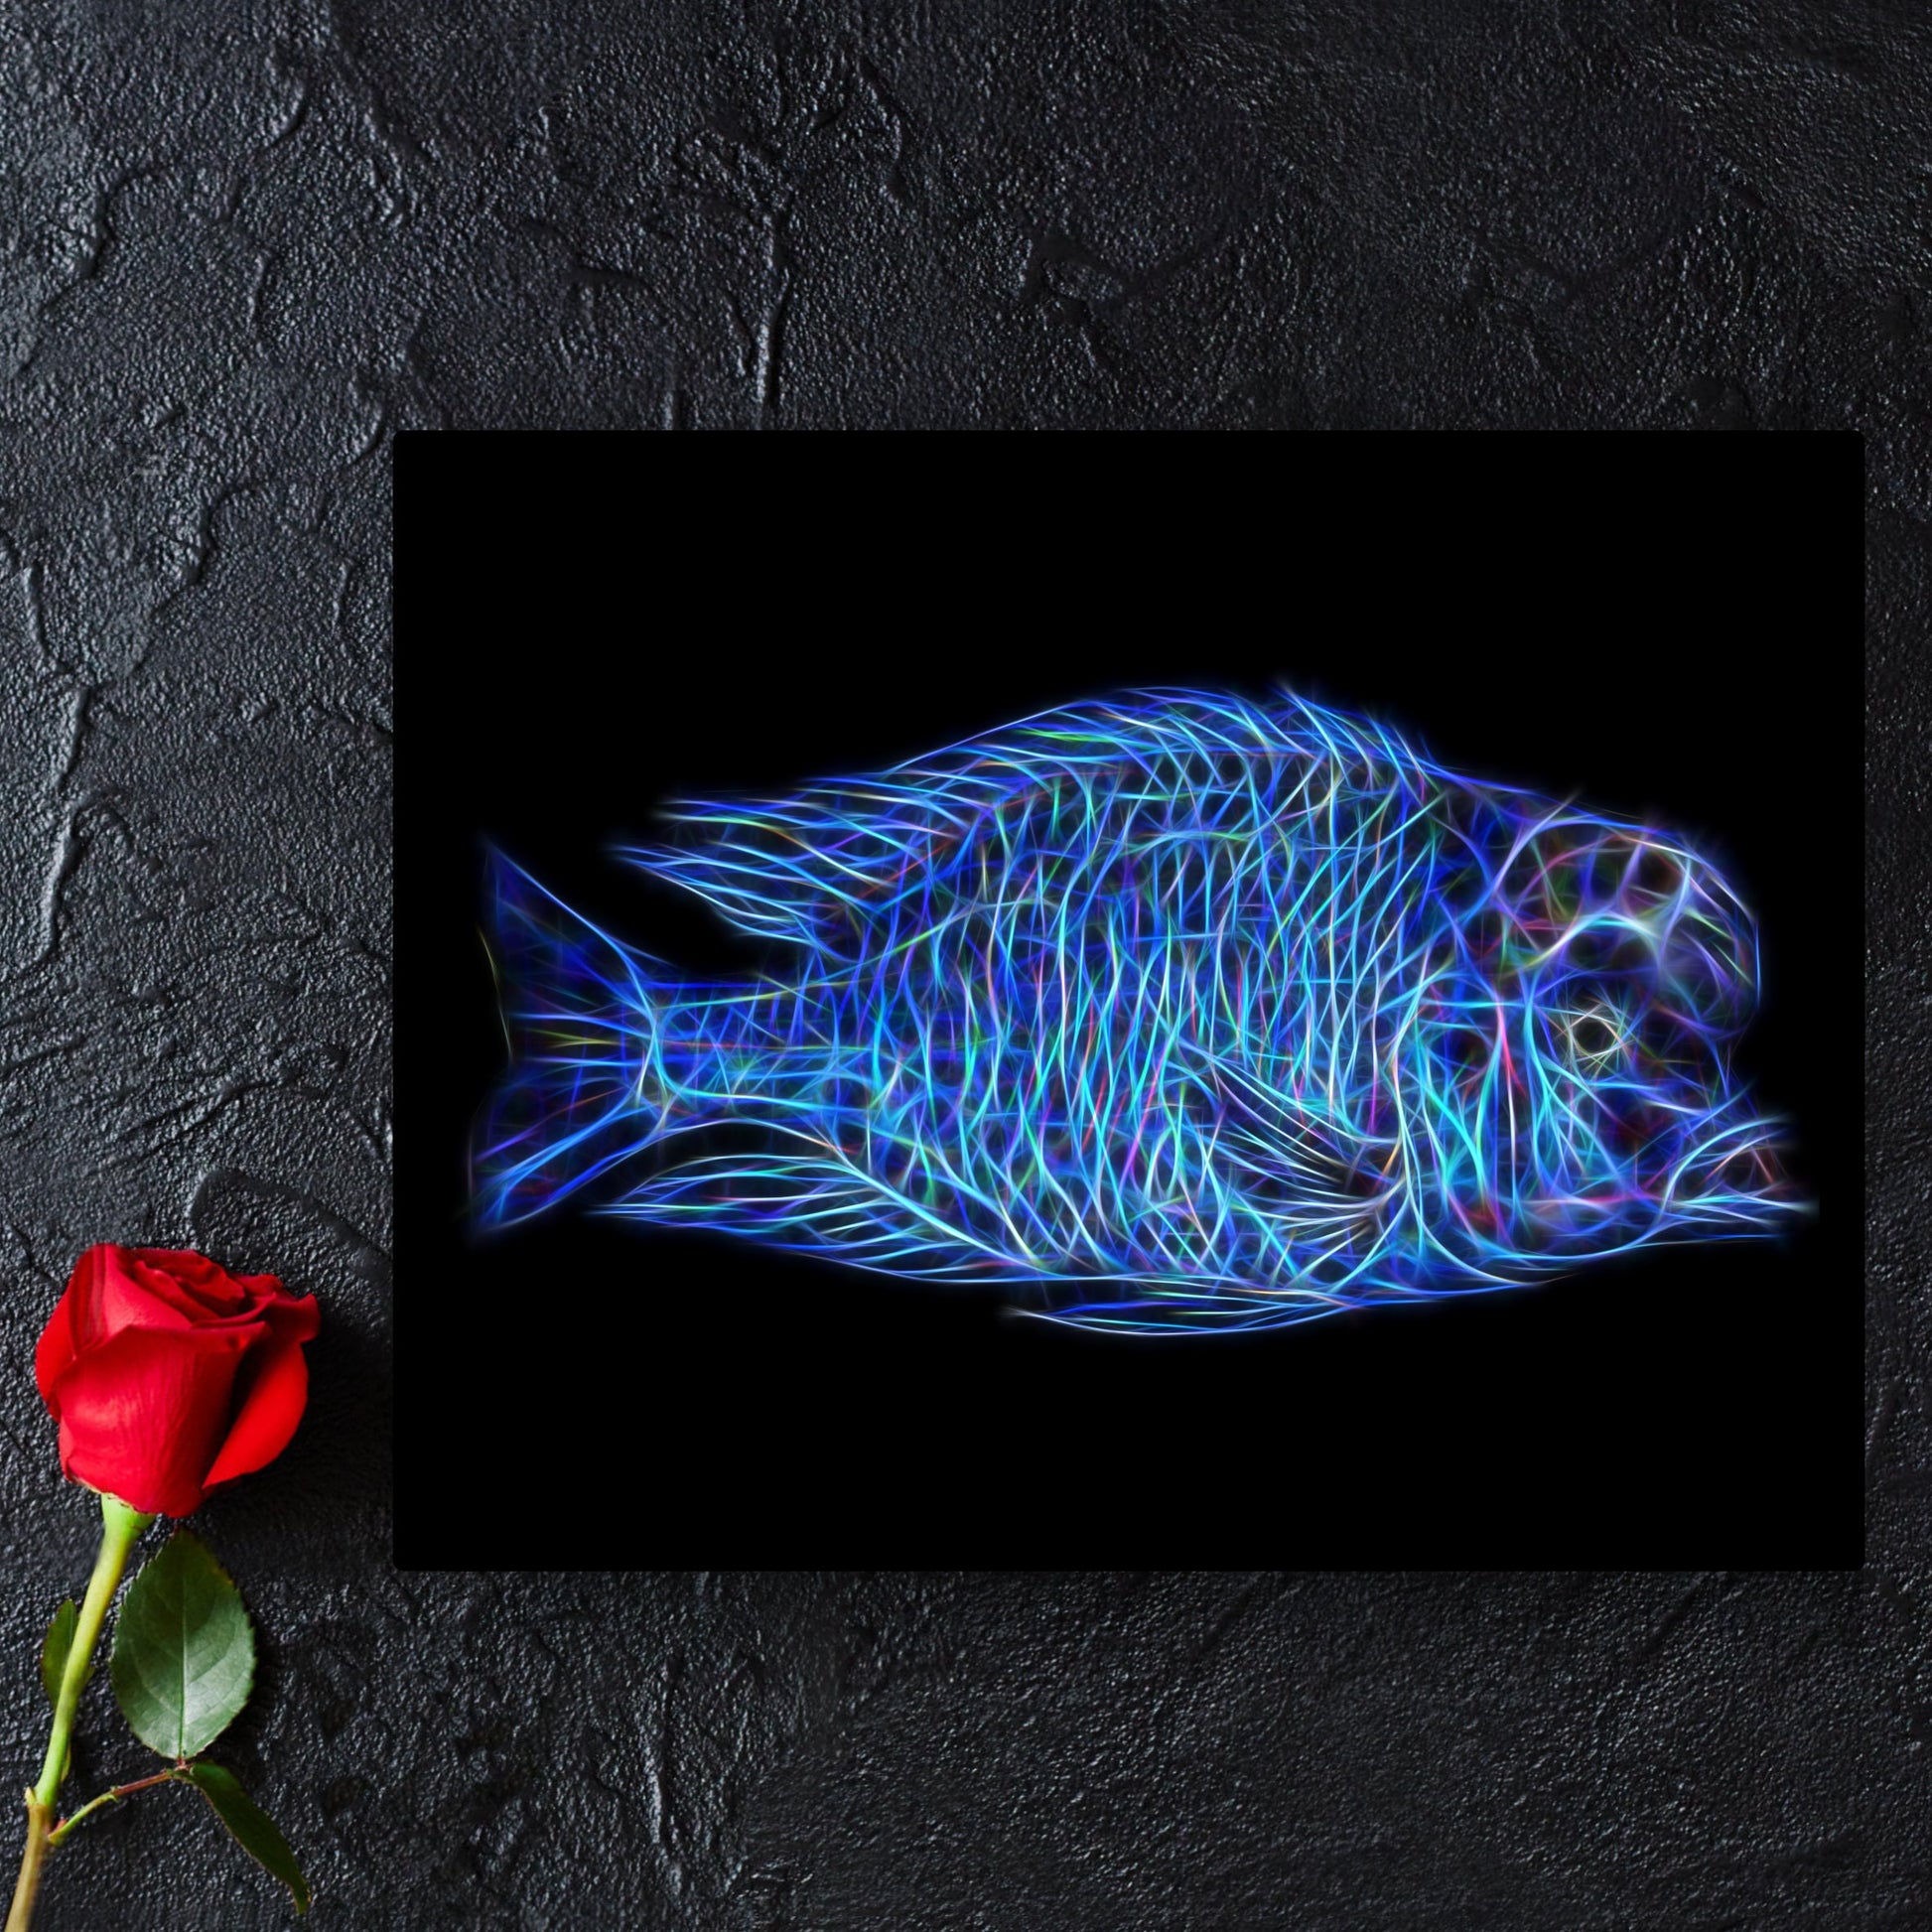 Blue Dolphin Cichlid Metal Wall Plaque with Stunning Fractal Art Design.  Cyrtocara Moorii